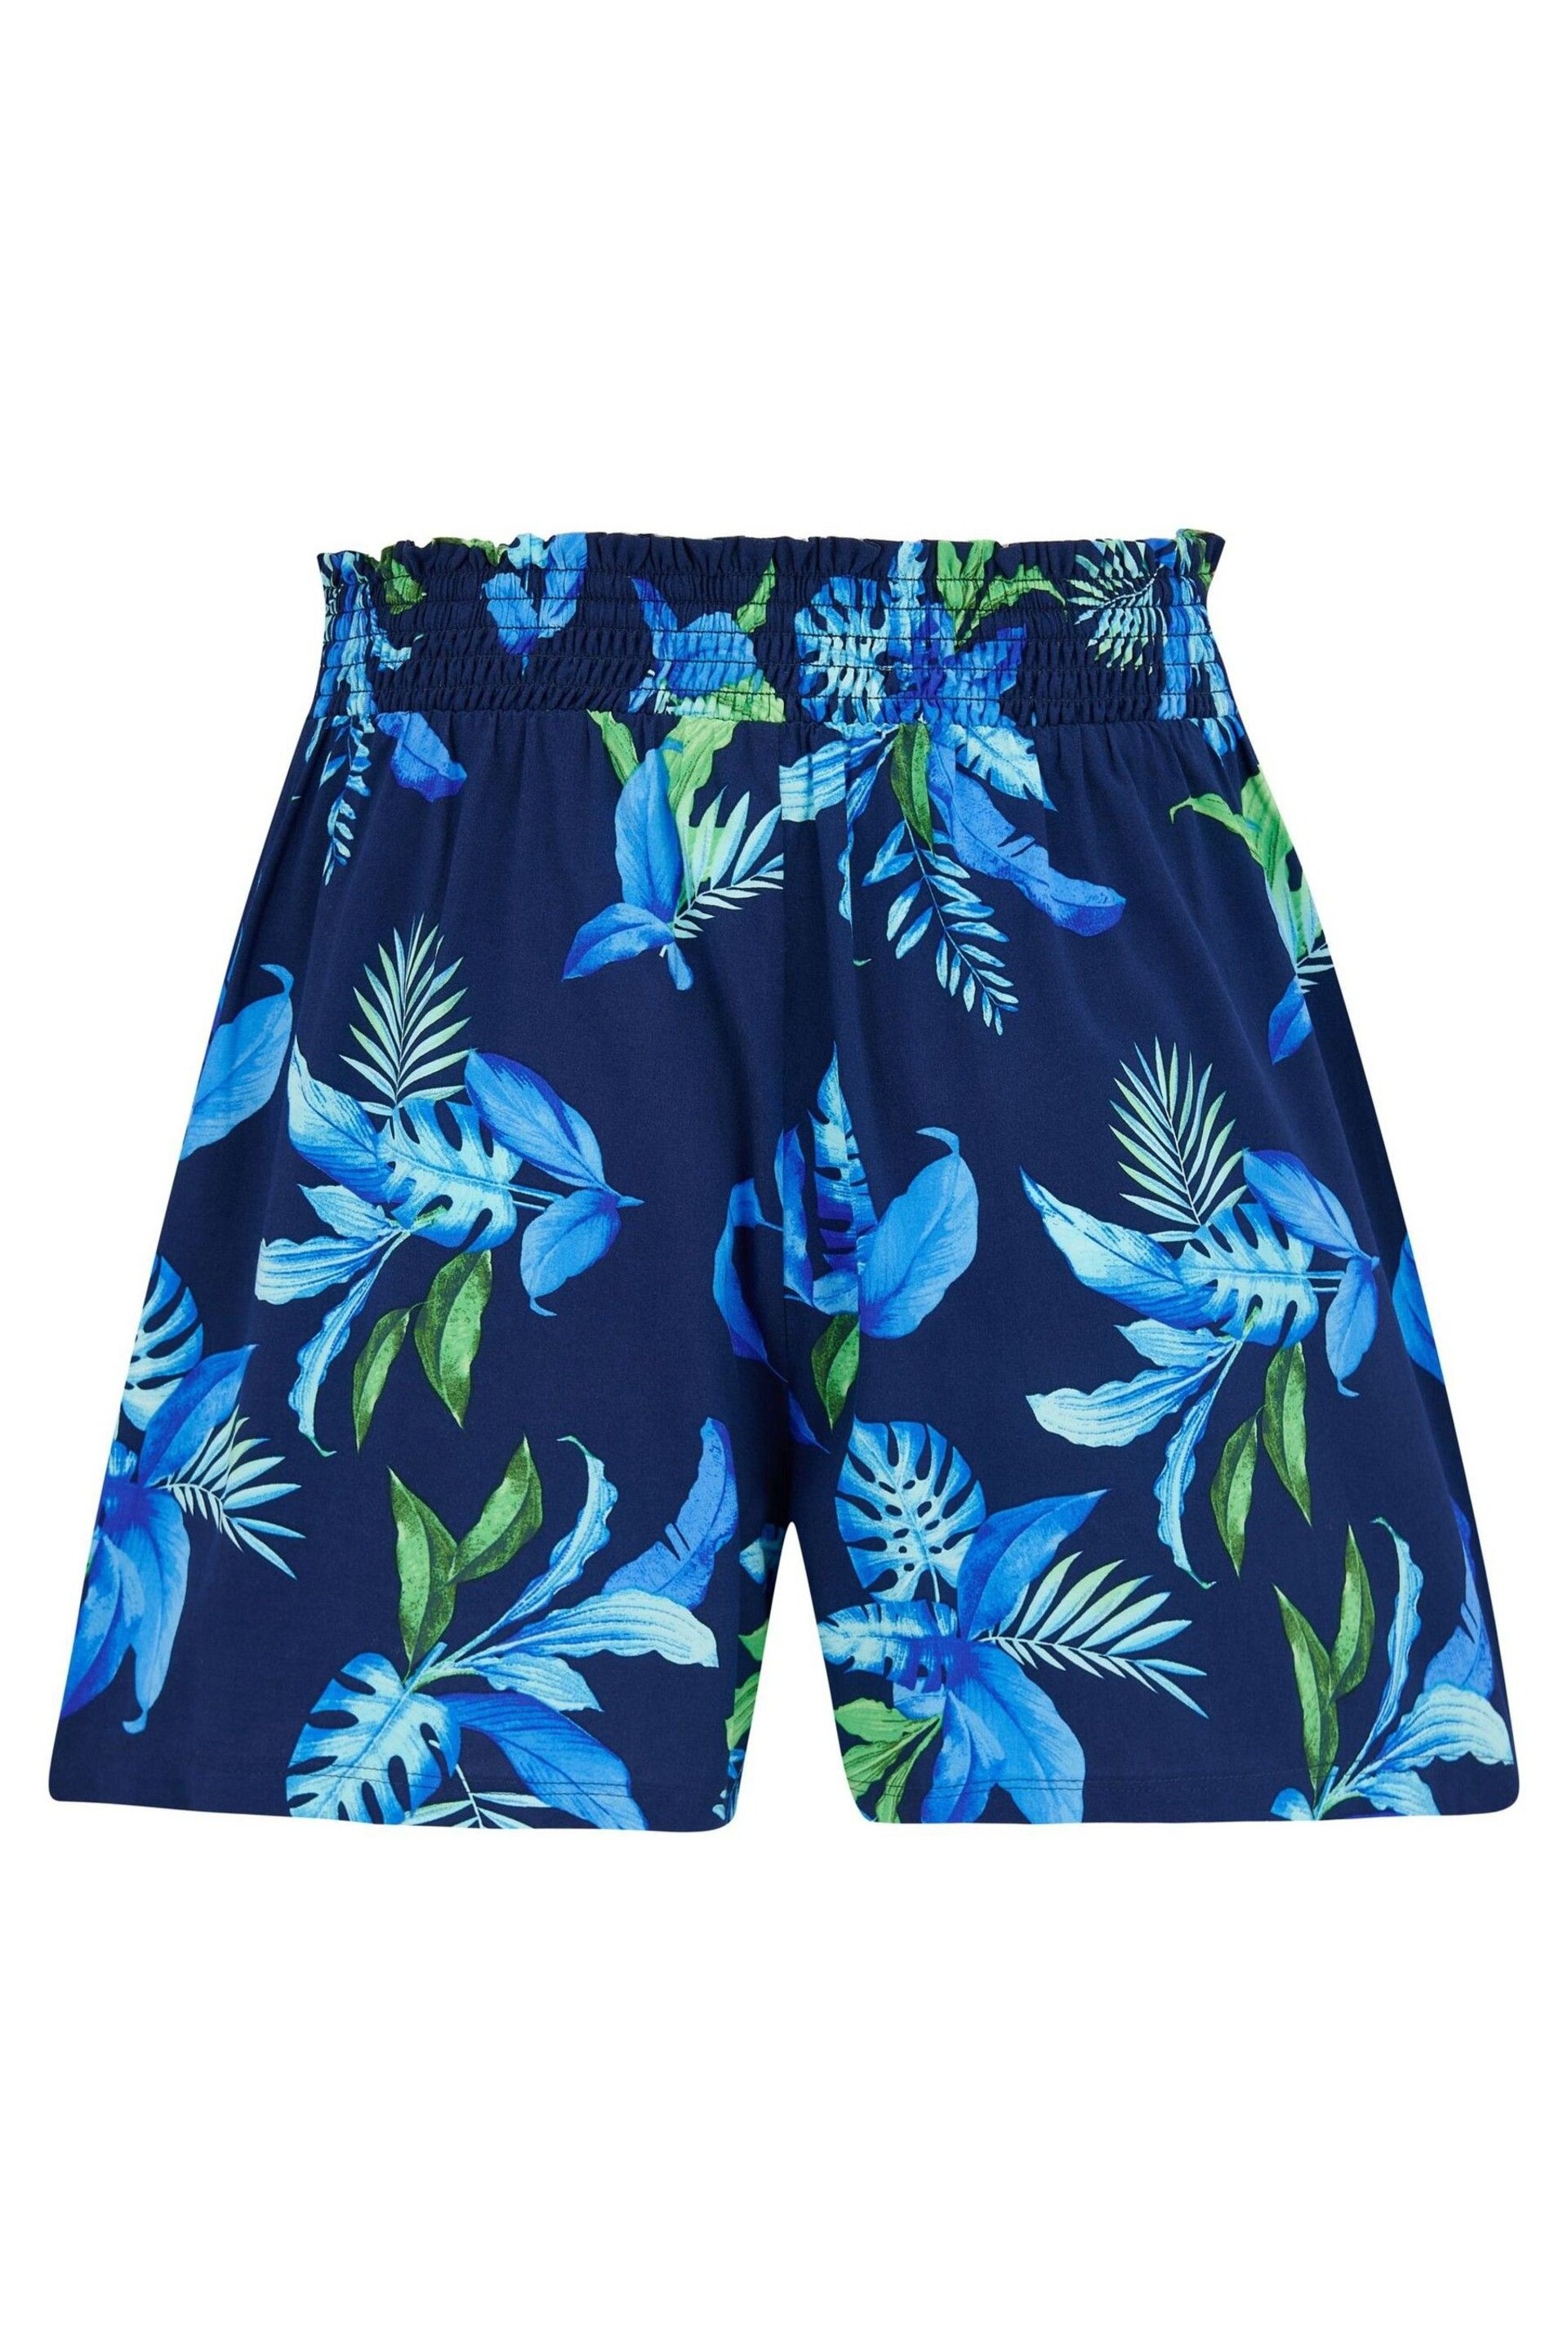 Pour Moi Blue LENZING™ ECOVERO™ Viscose Beach Shorts - Image 3 of 4